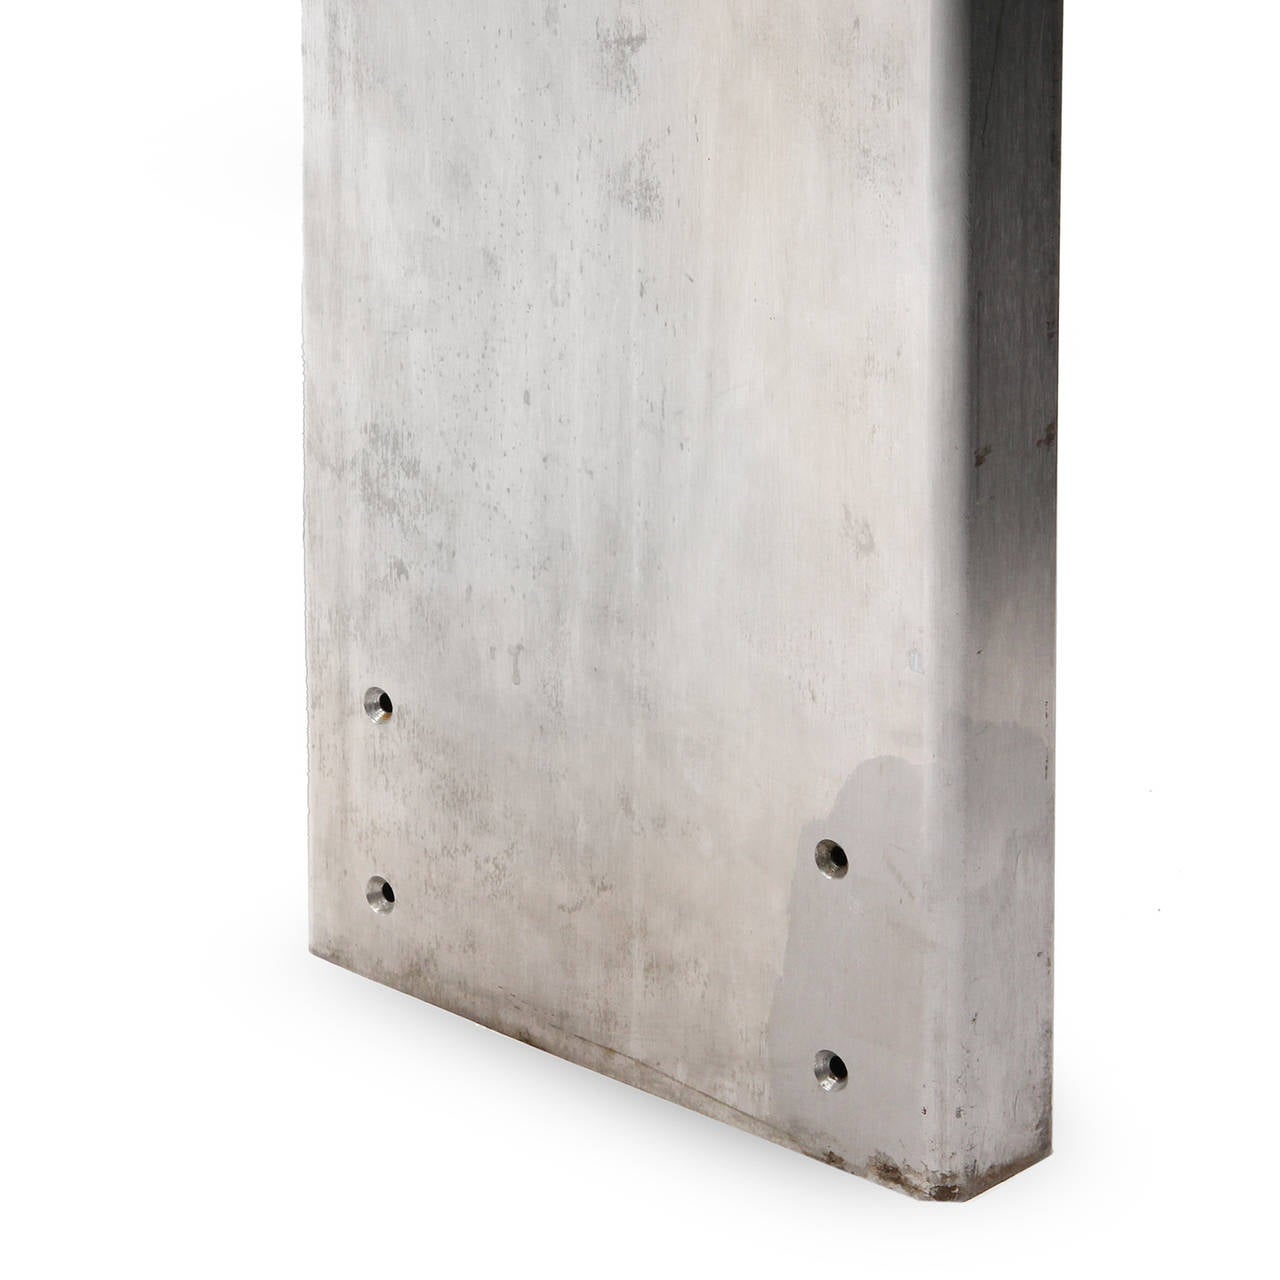 Polished Long Minimalist Steel Table from Yankee Stadium